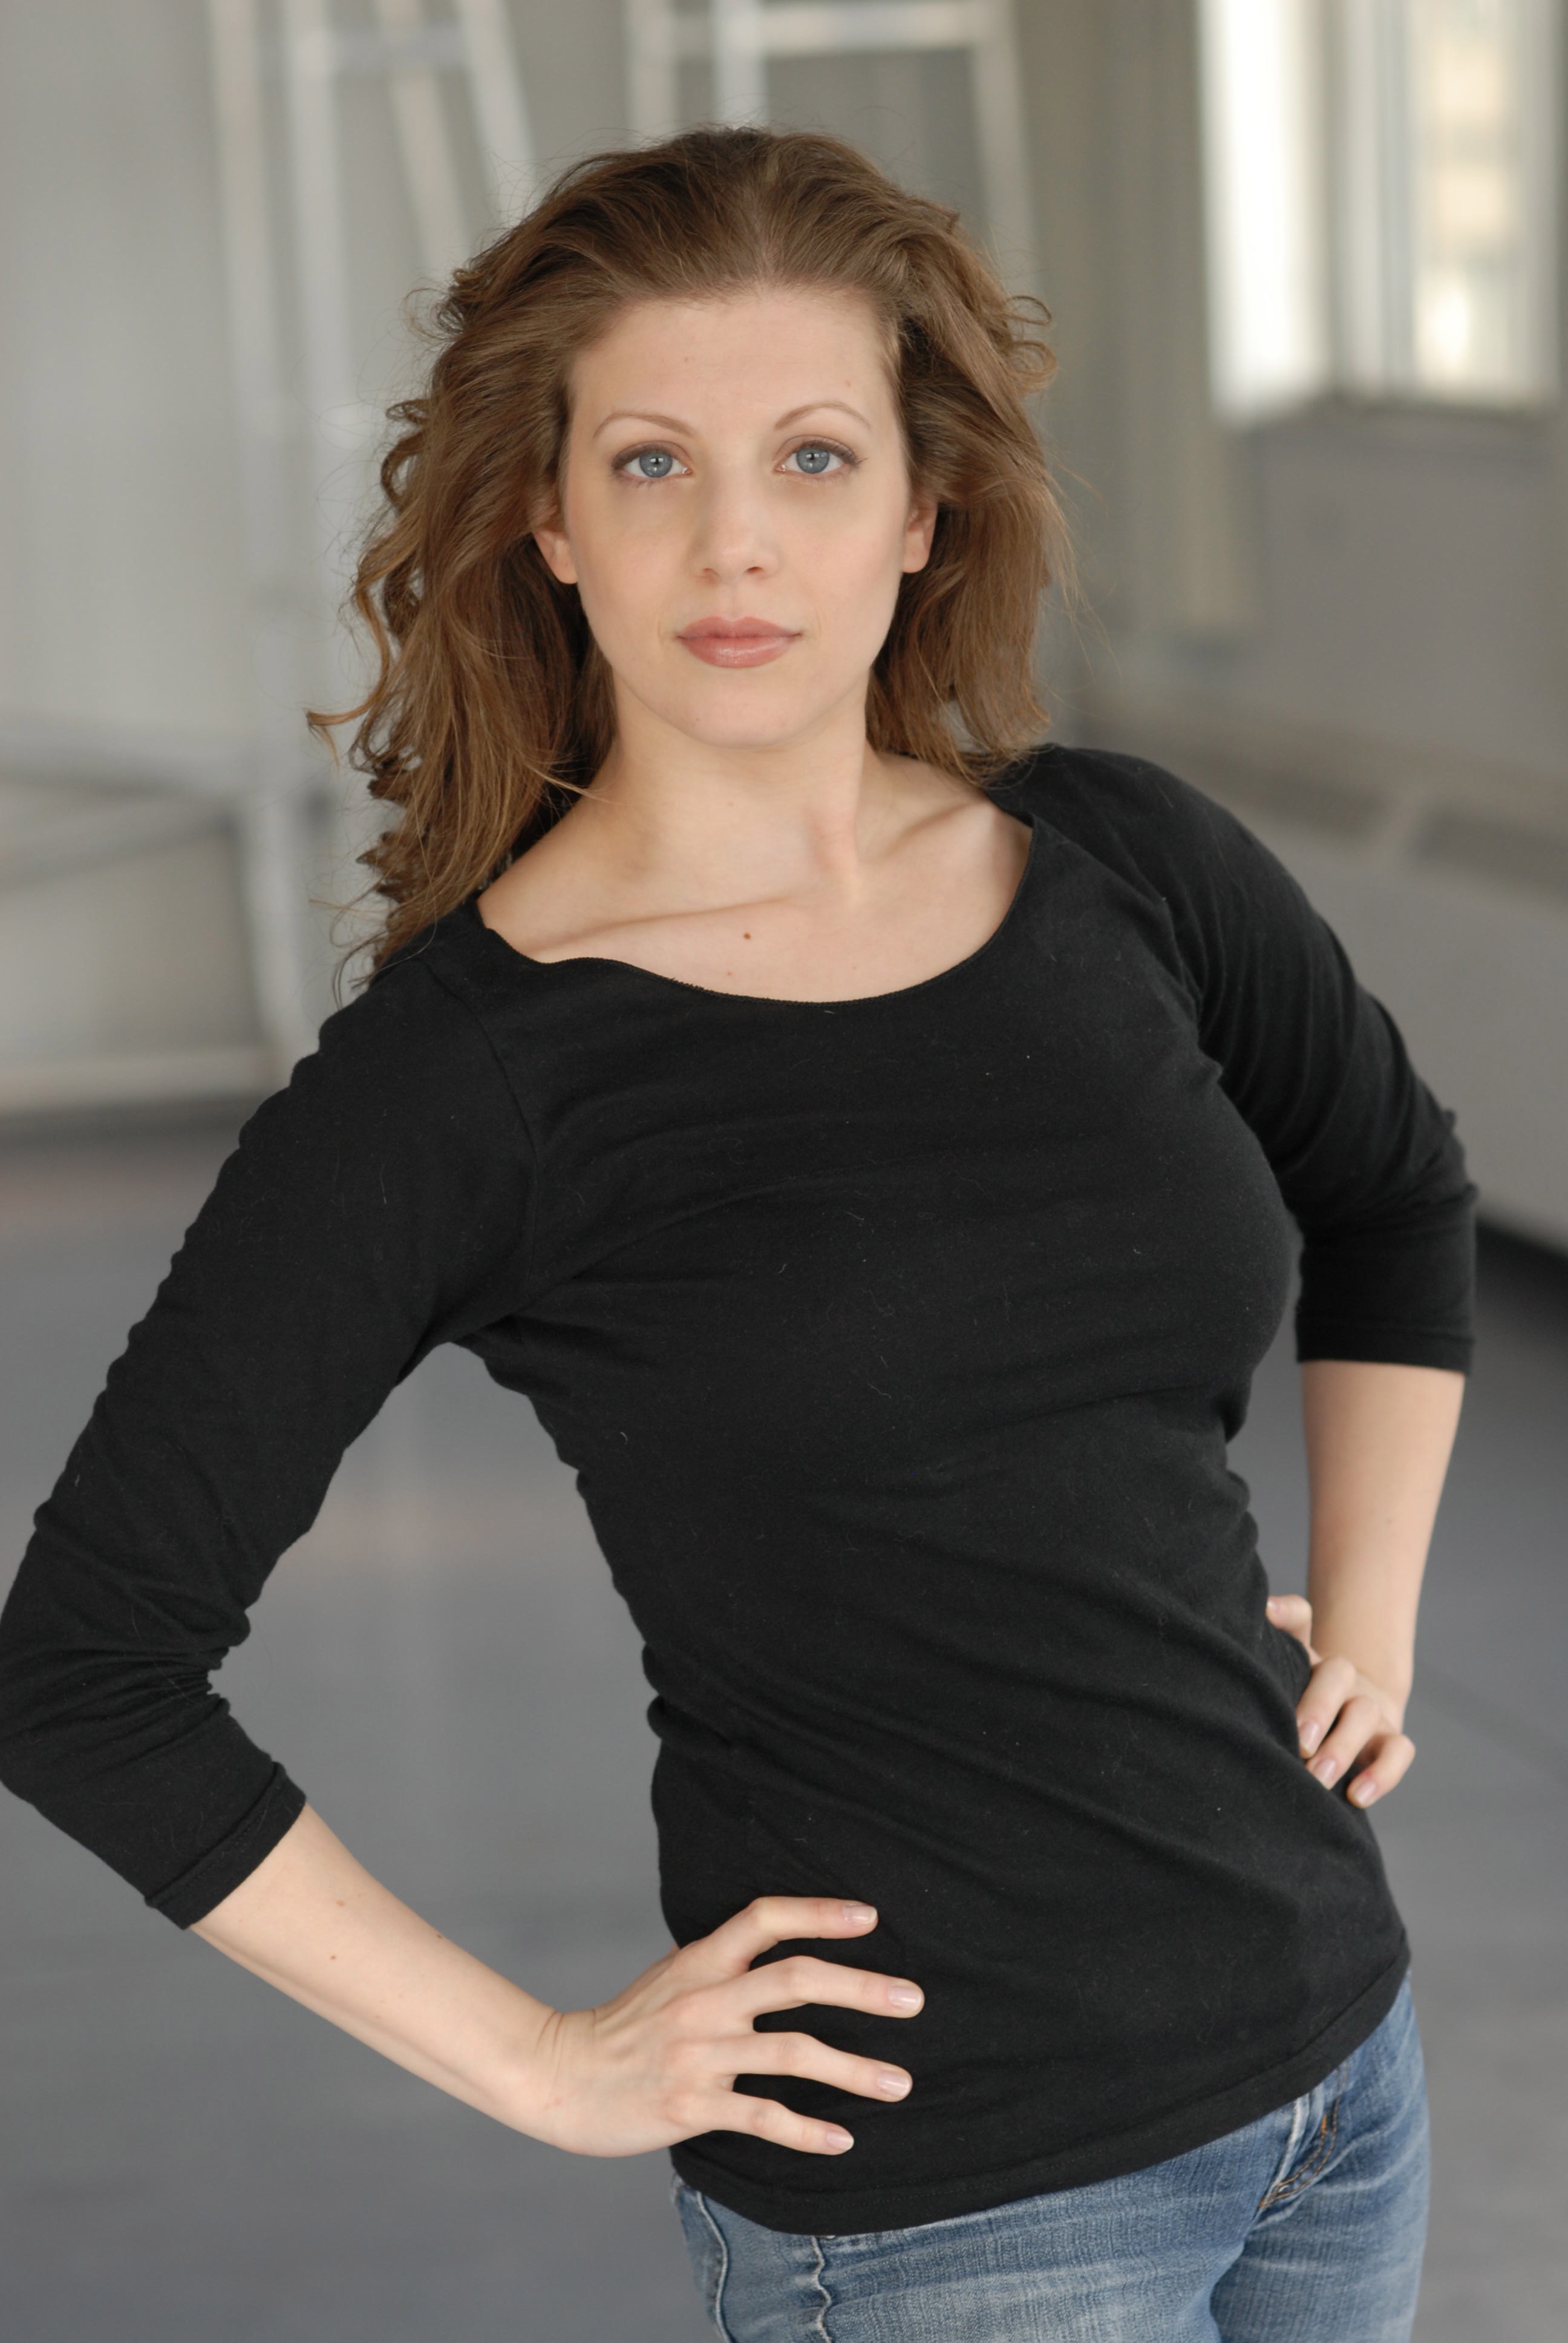 Adina Katz